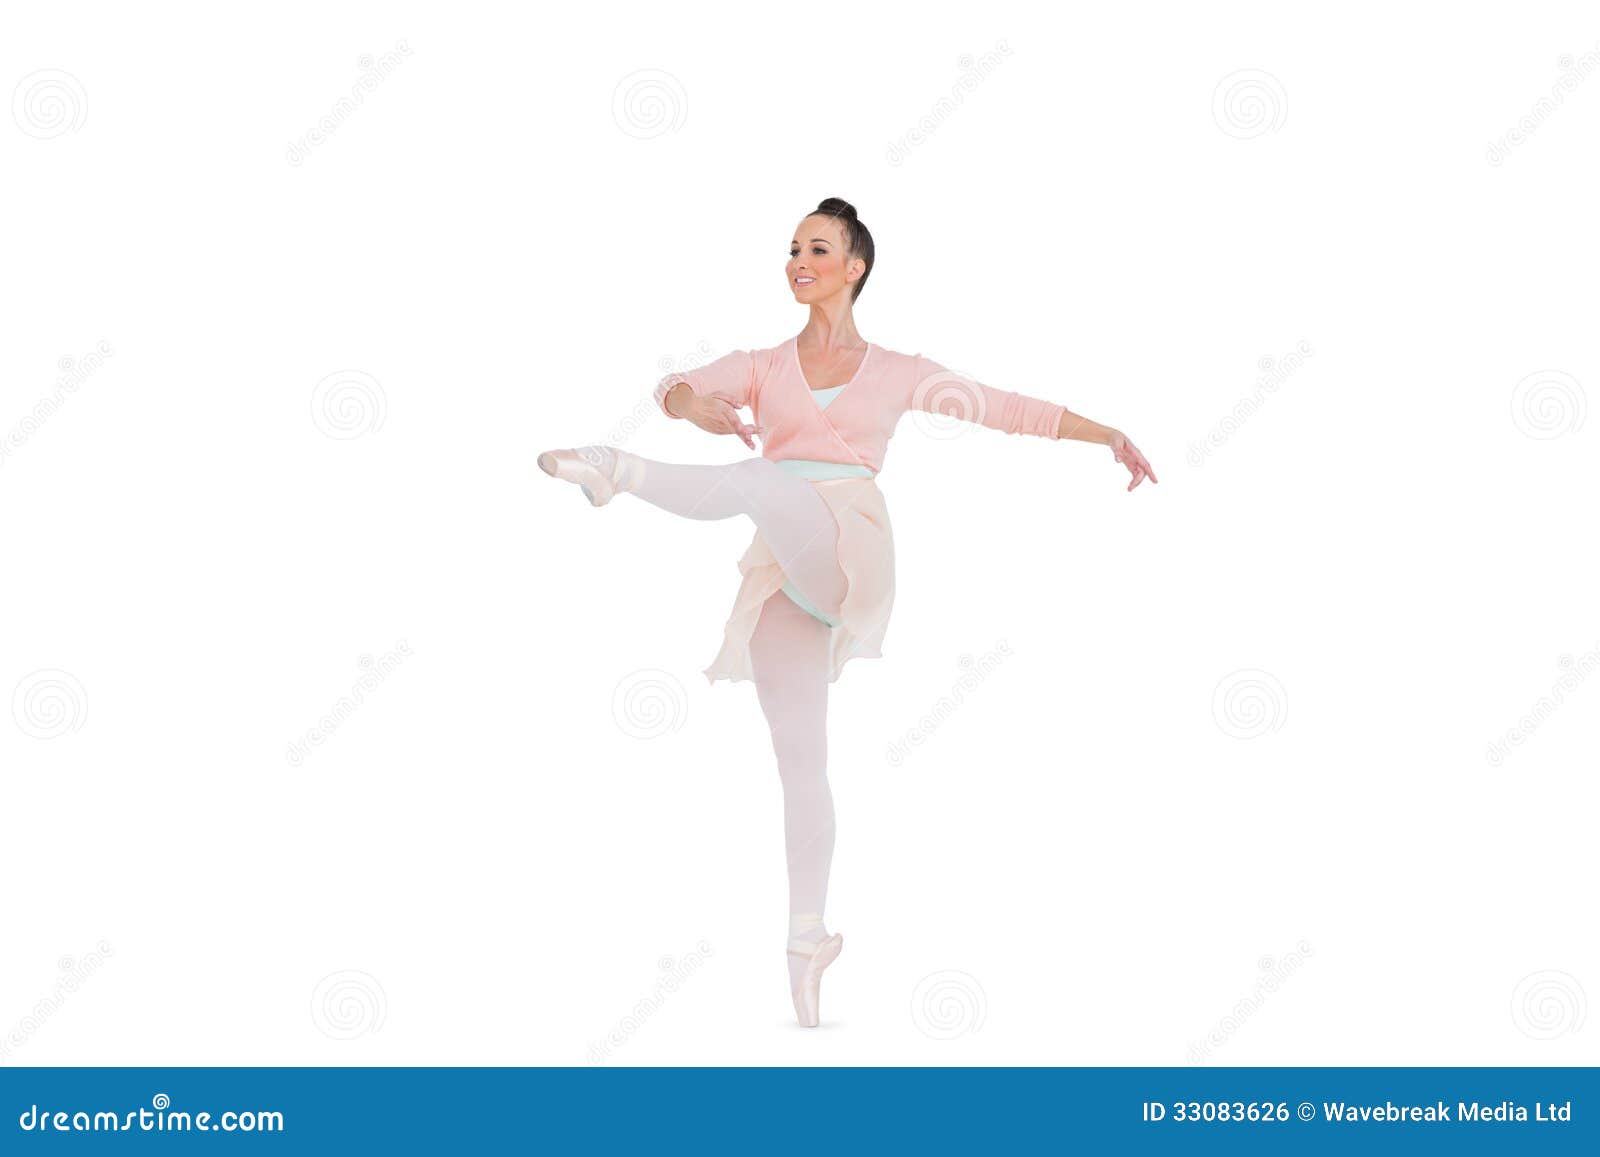 219 Ballerina Spinning Stock Photos - Free & Royalty-Free Stock